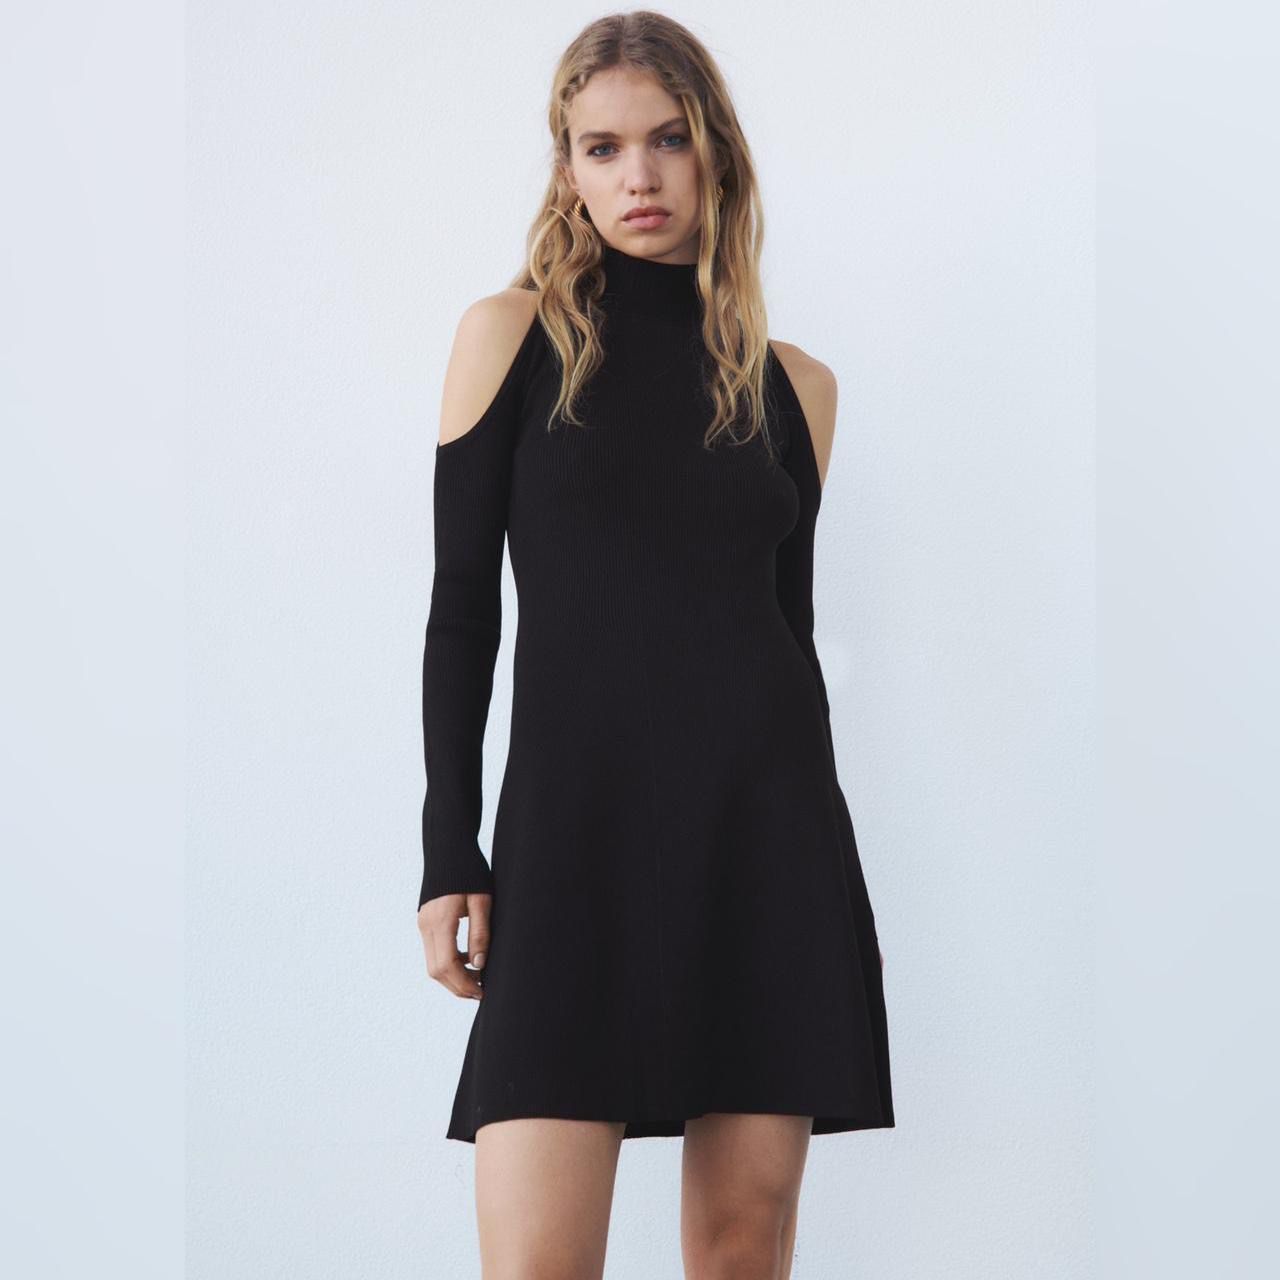 Zara Women’s Dress Size Medium